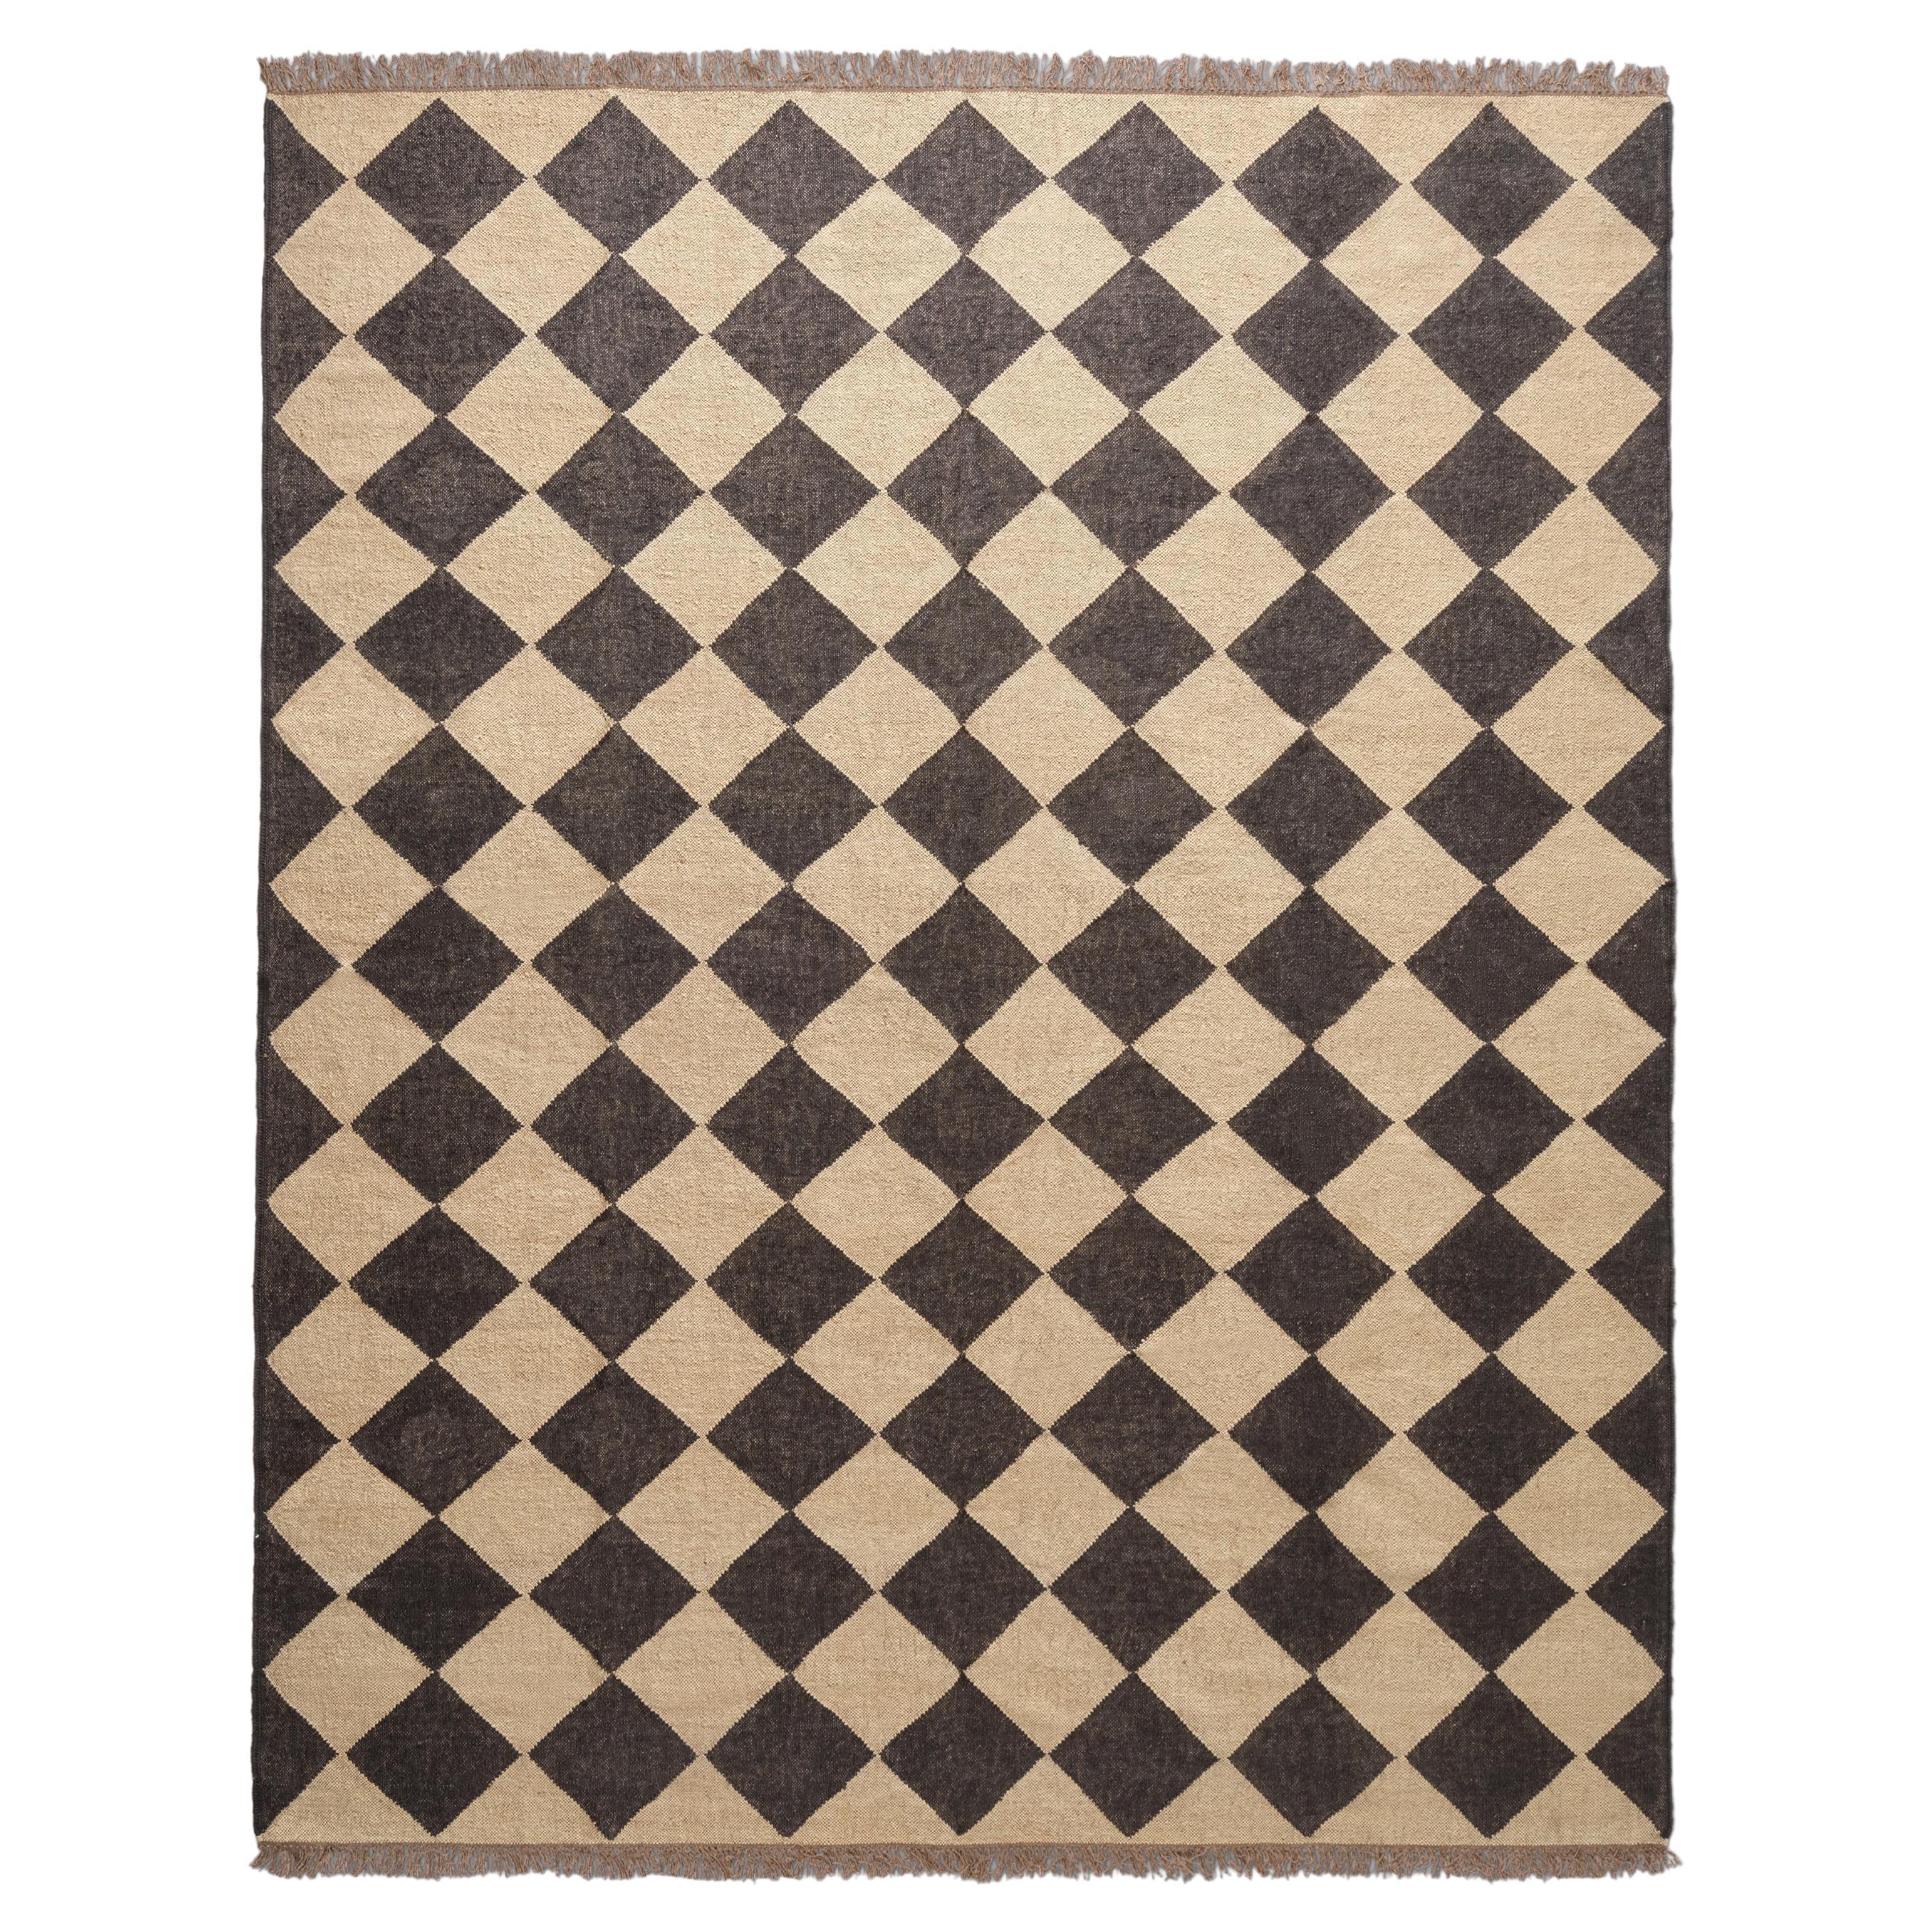 The Forsyth Checkerboard Rug - Diamond Checks in Off Black, 6x9